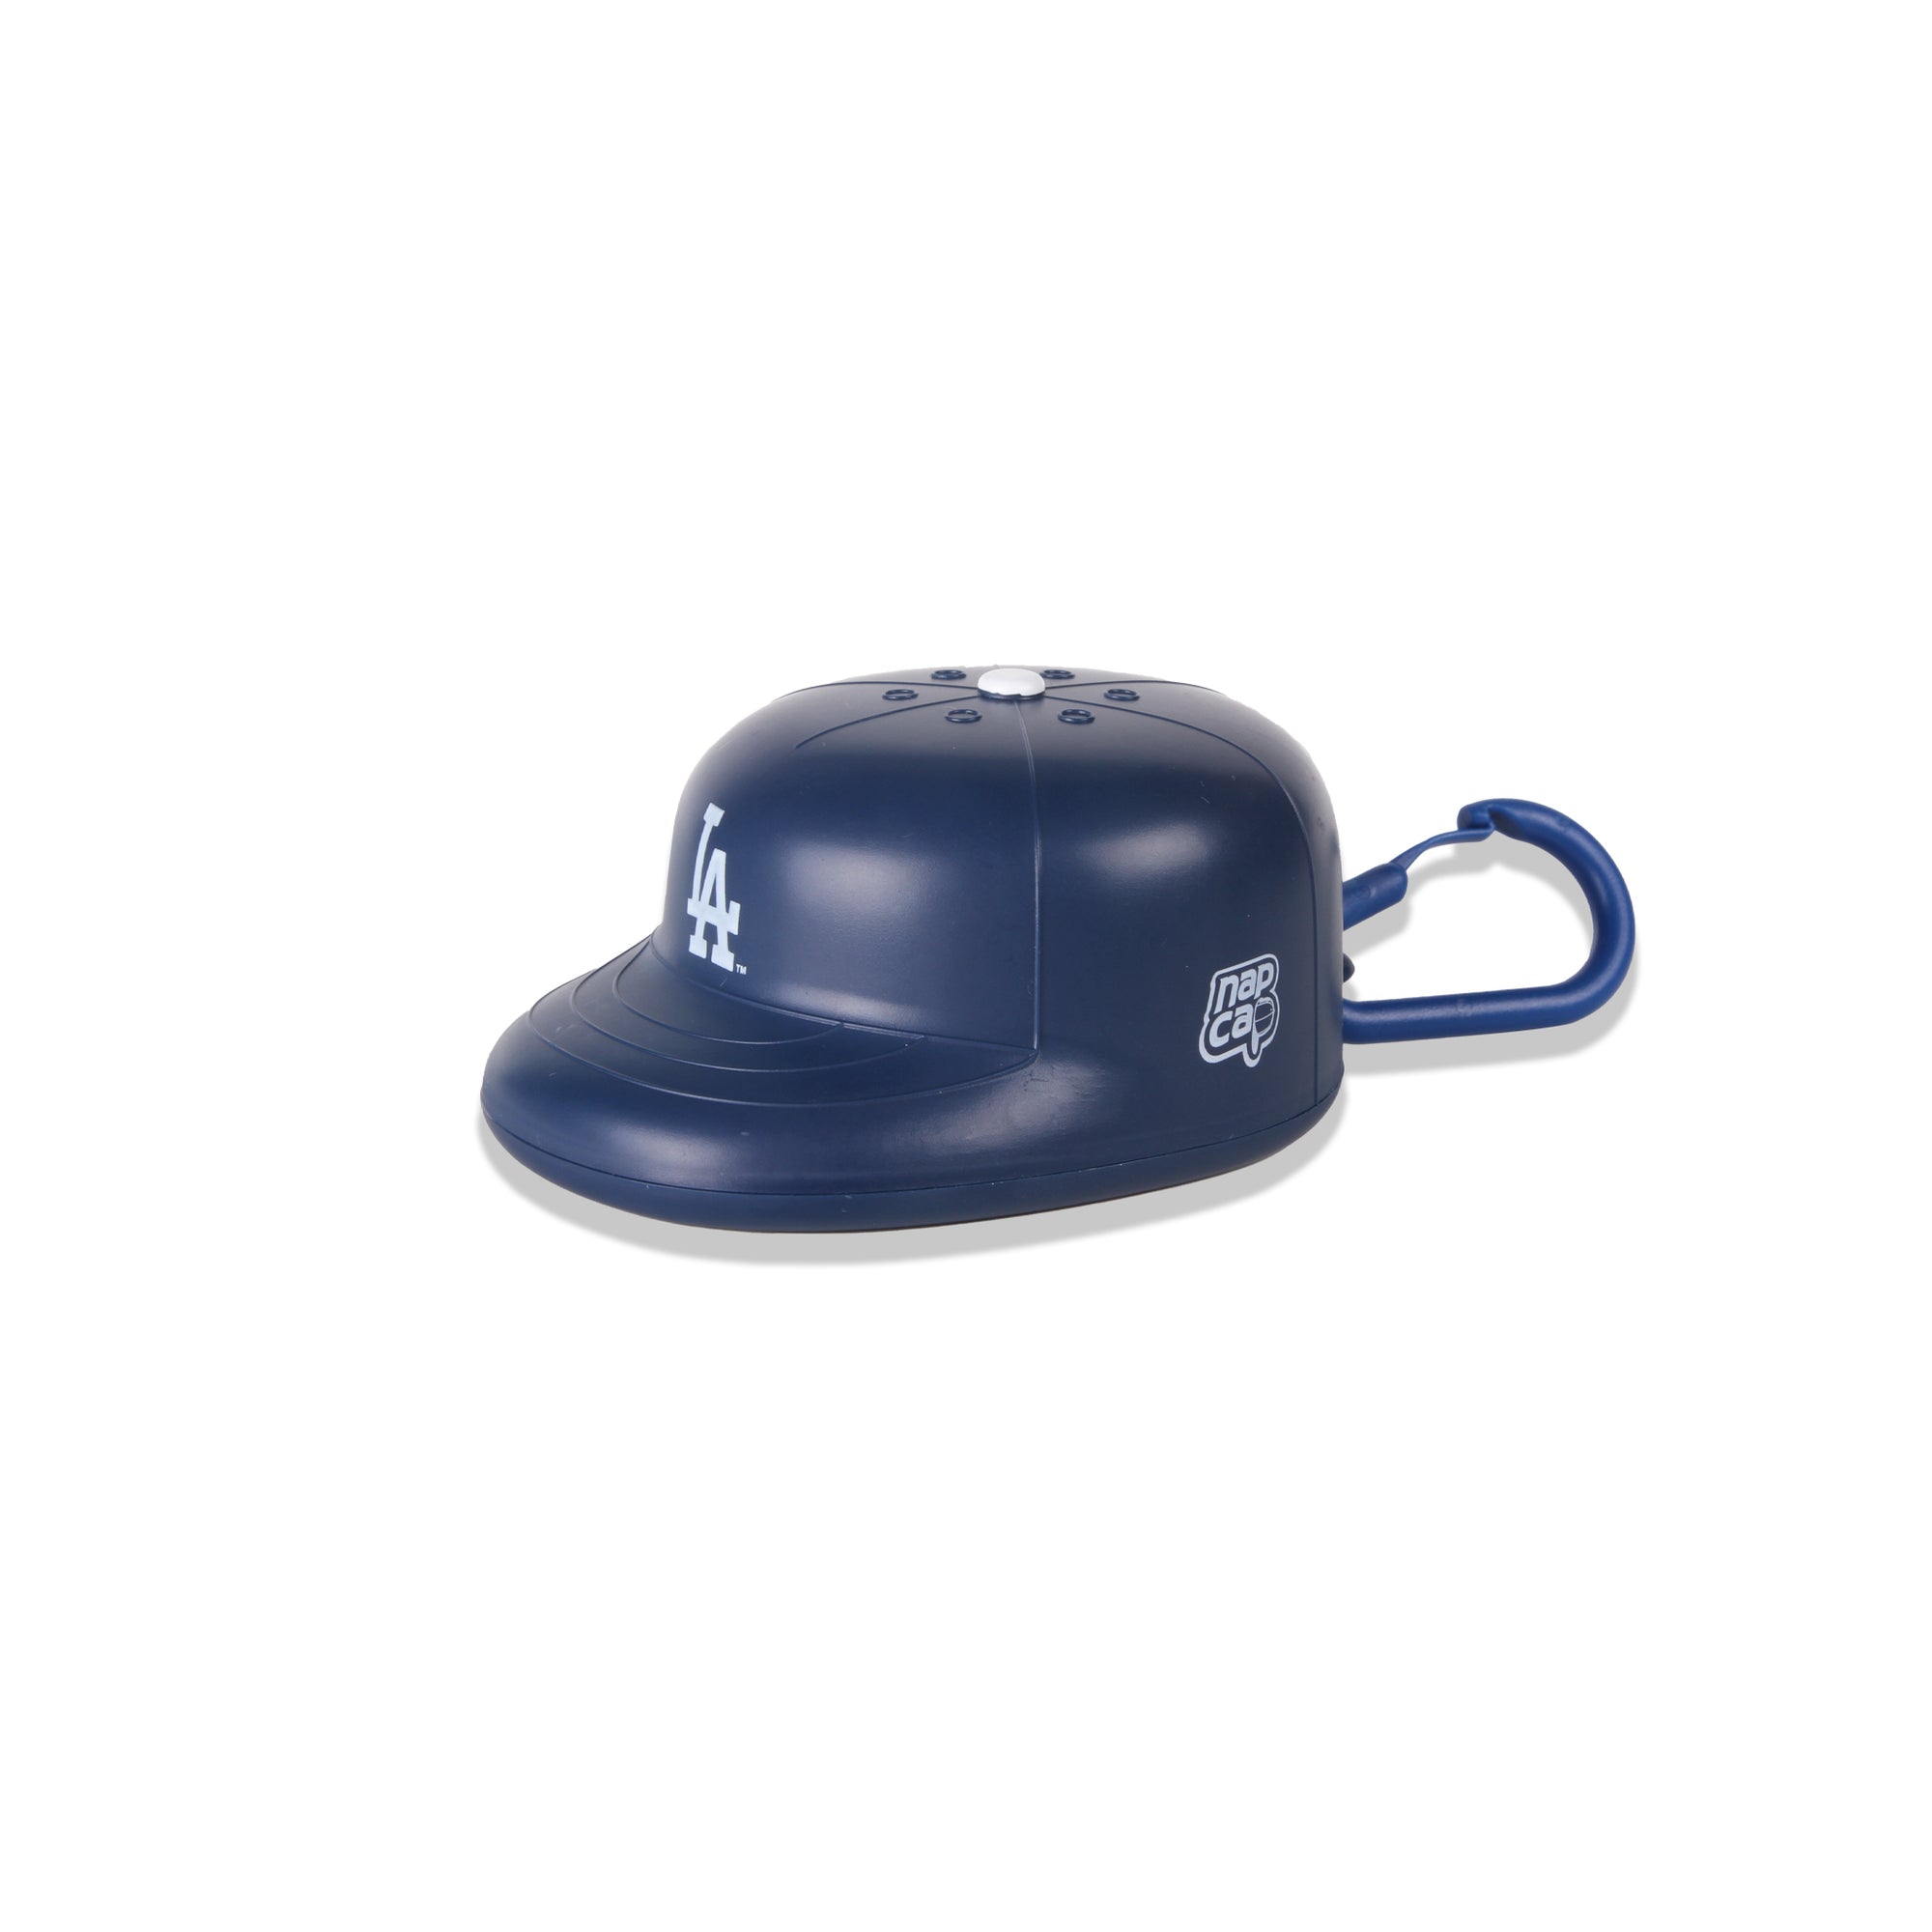 Dodgers Cap Dispenser